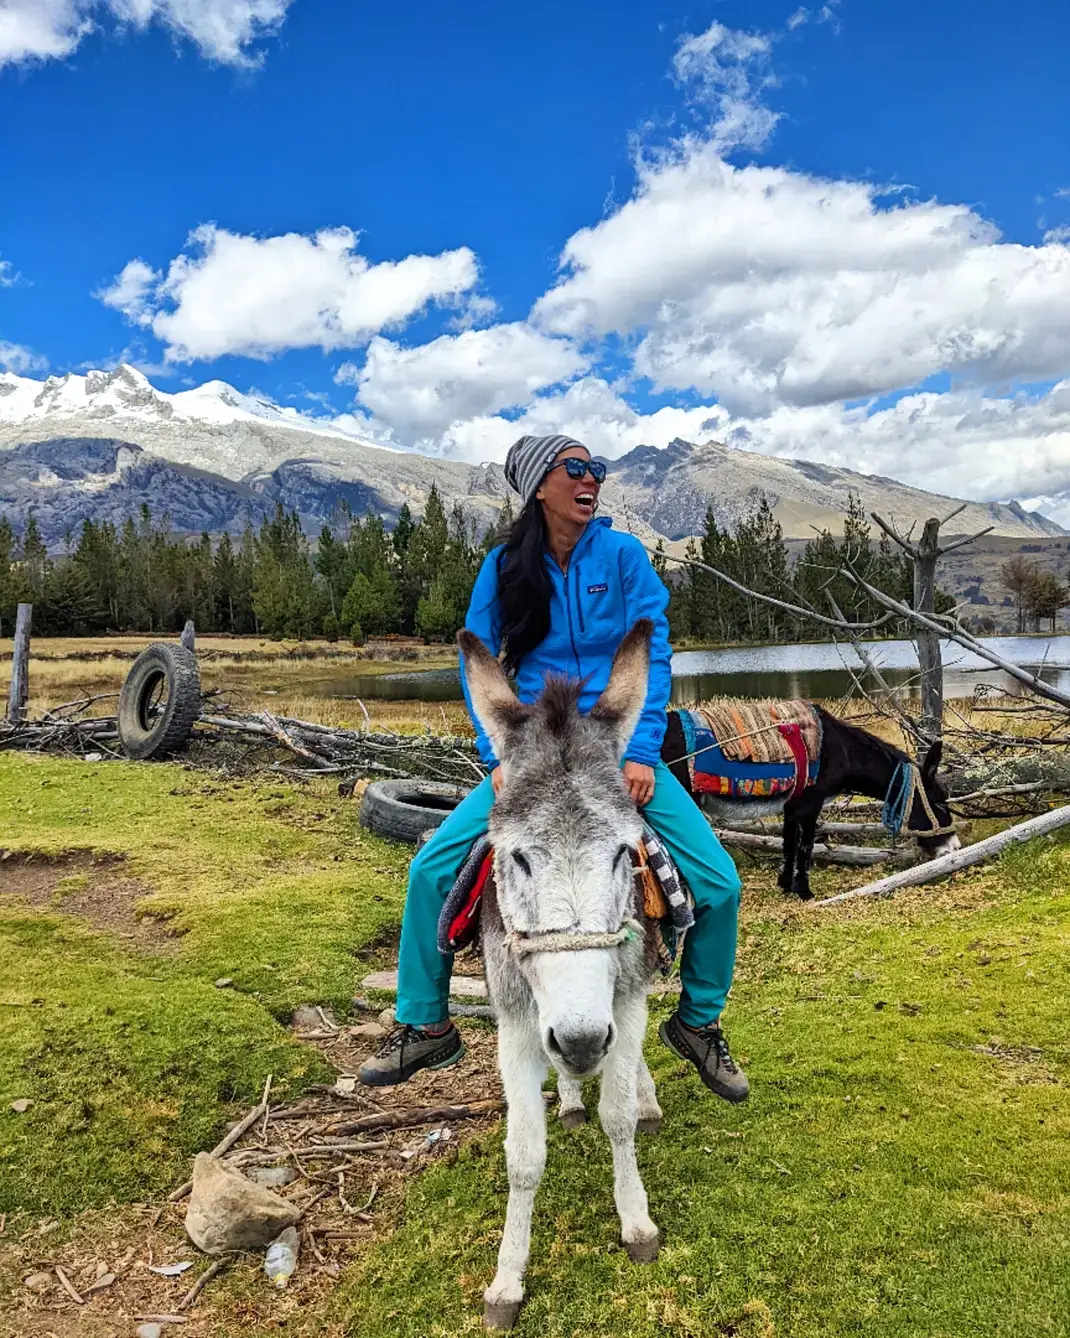 Clara Soh riding on the back of a donkey.